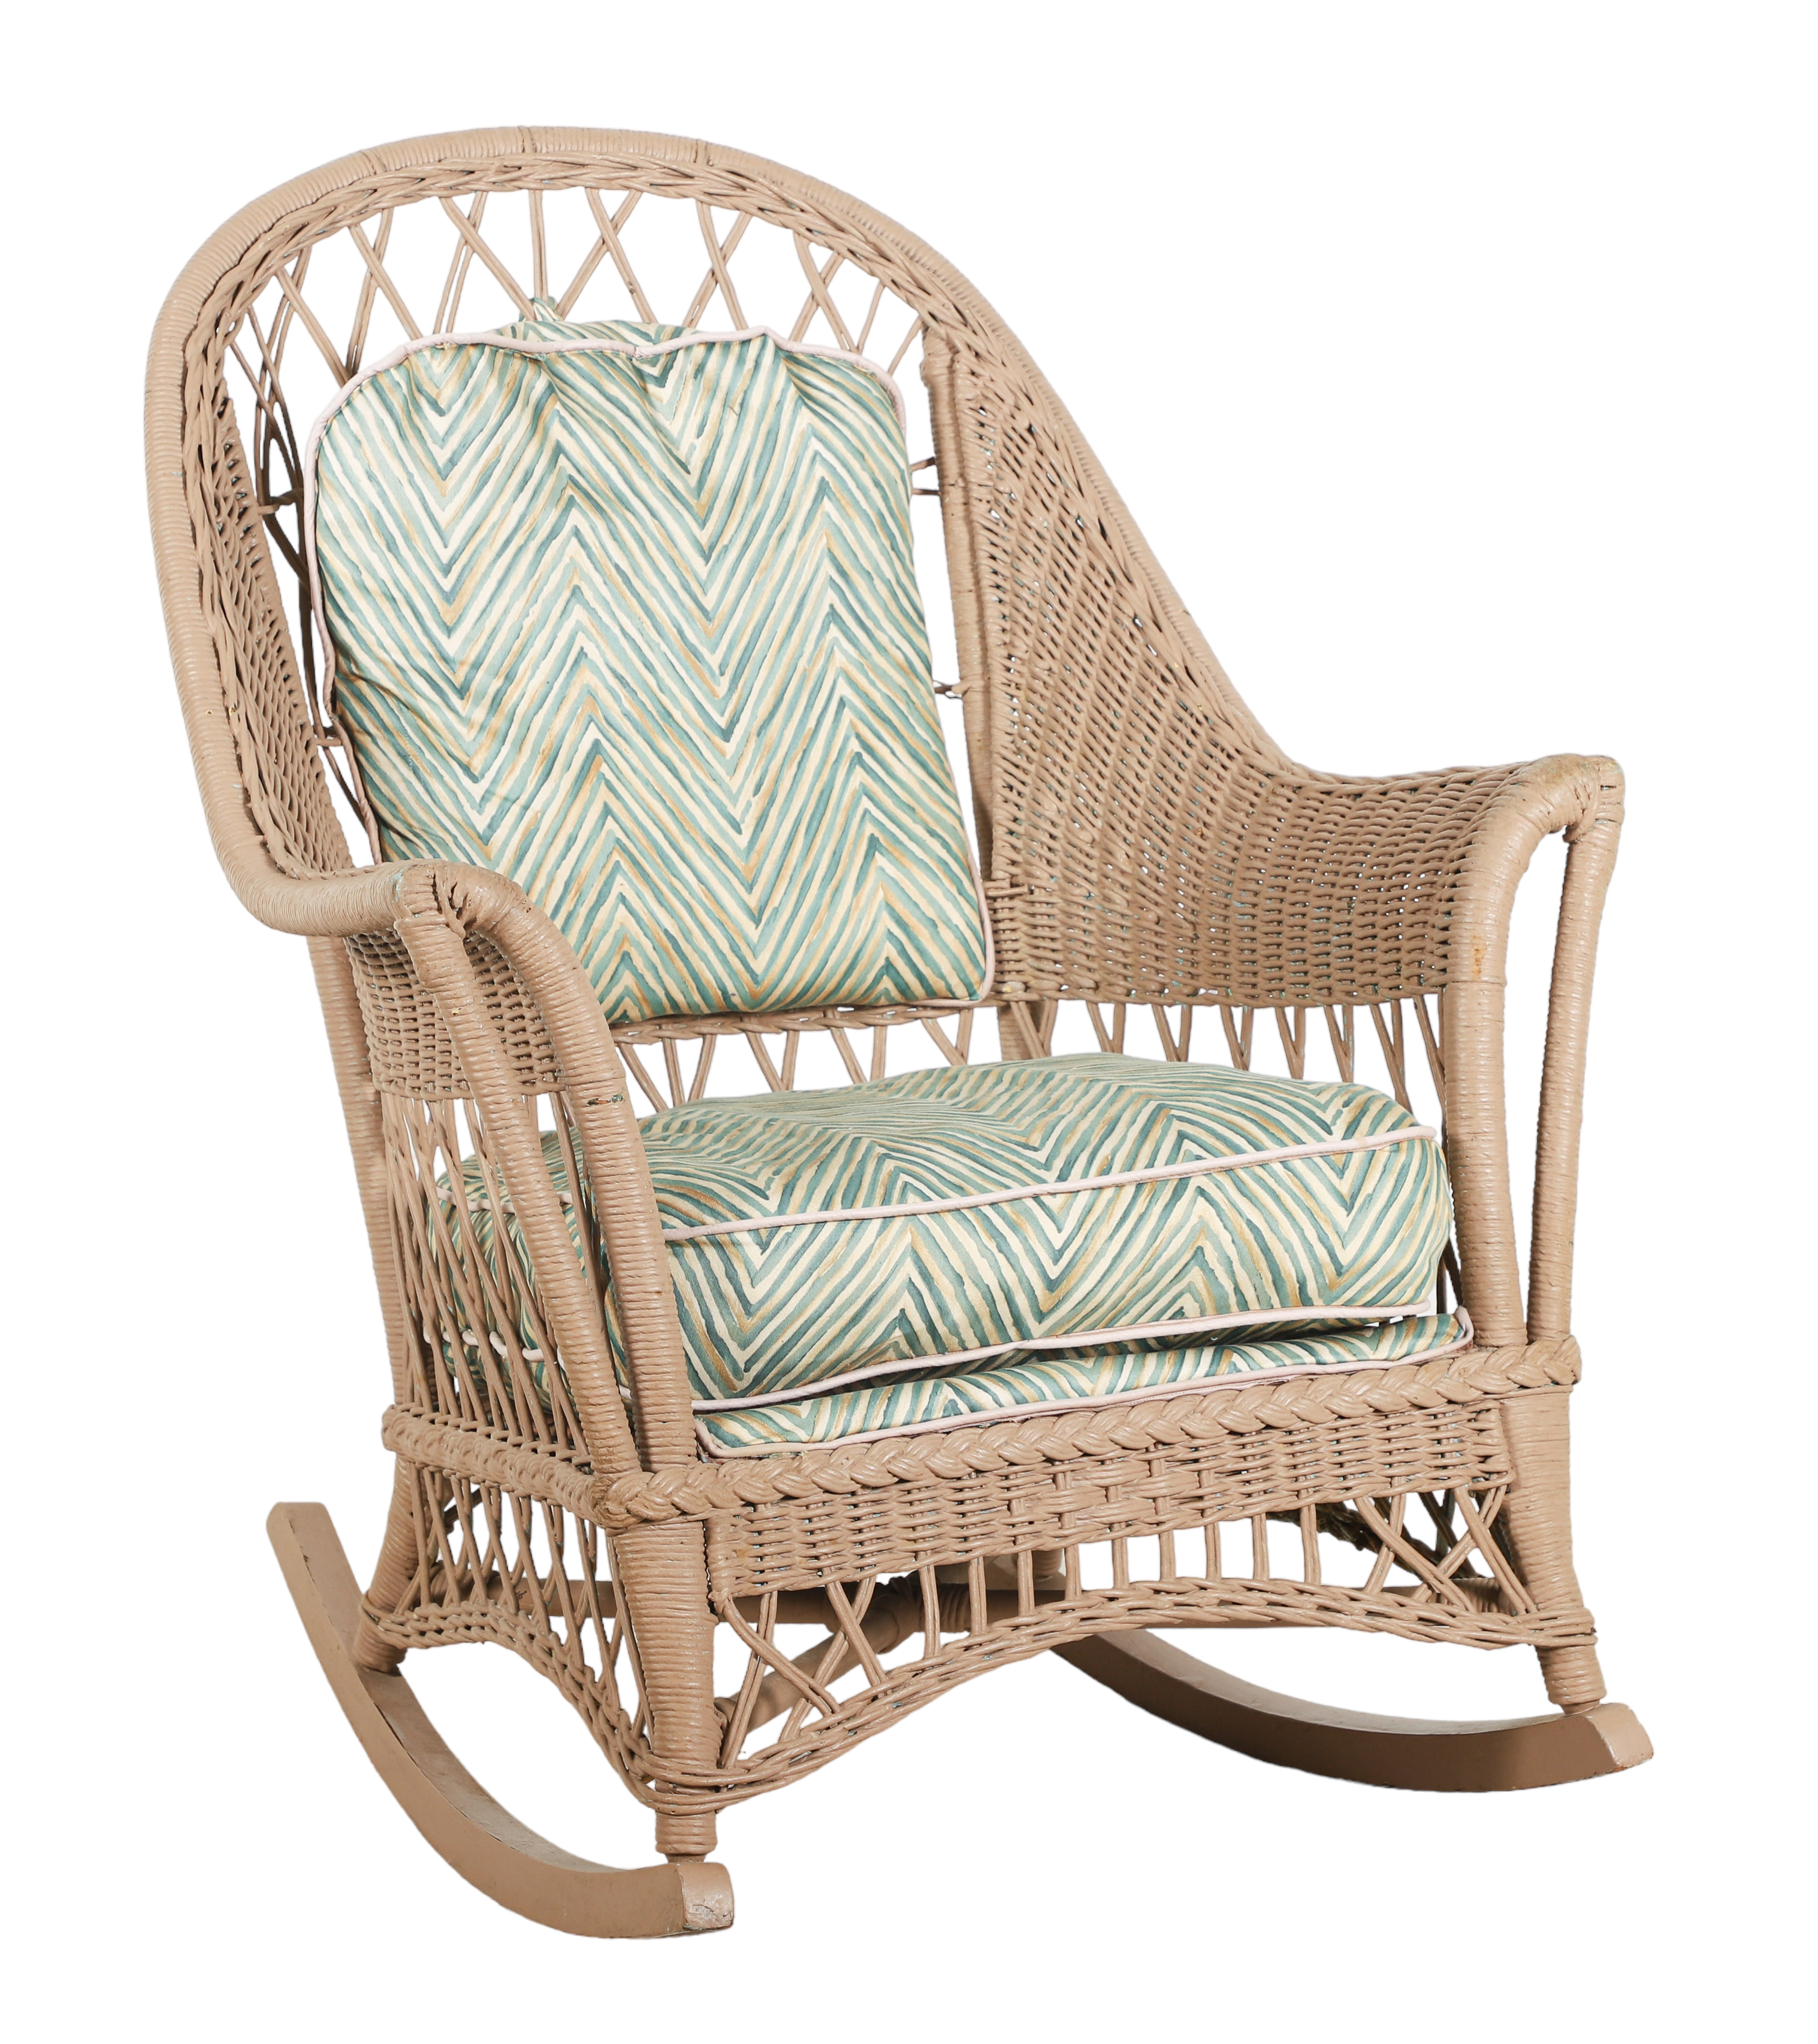 Painted wicker rocking chair beige 3b1834